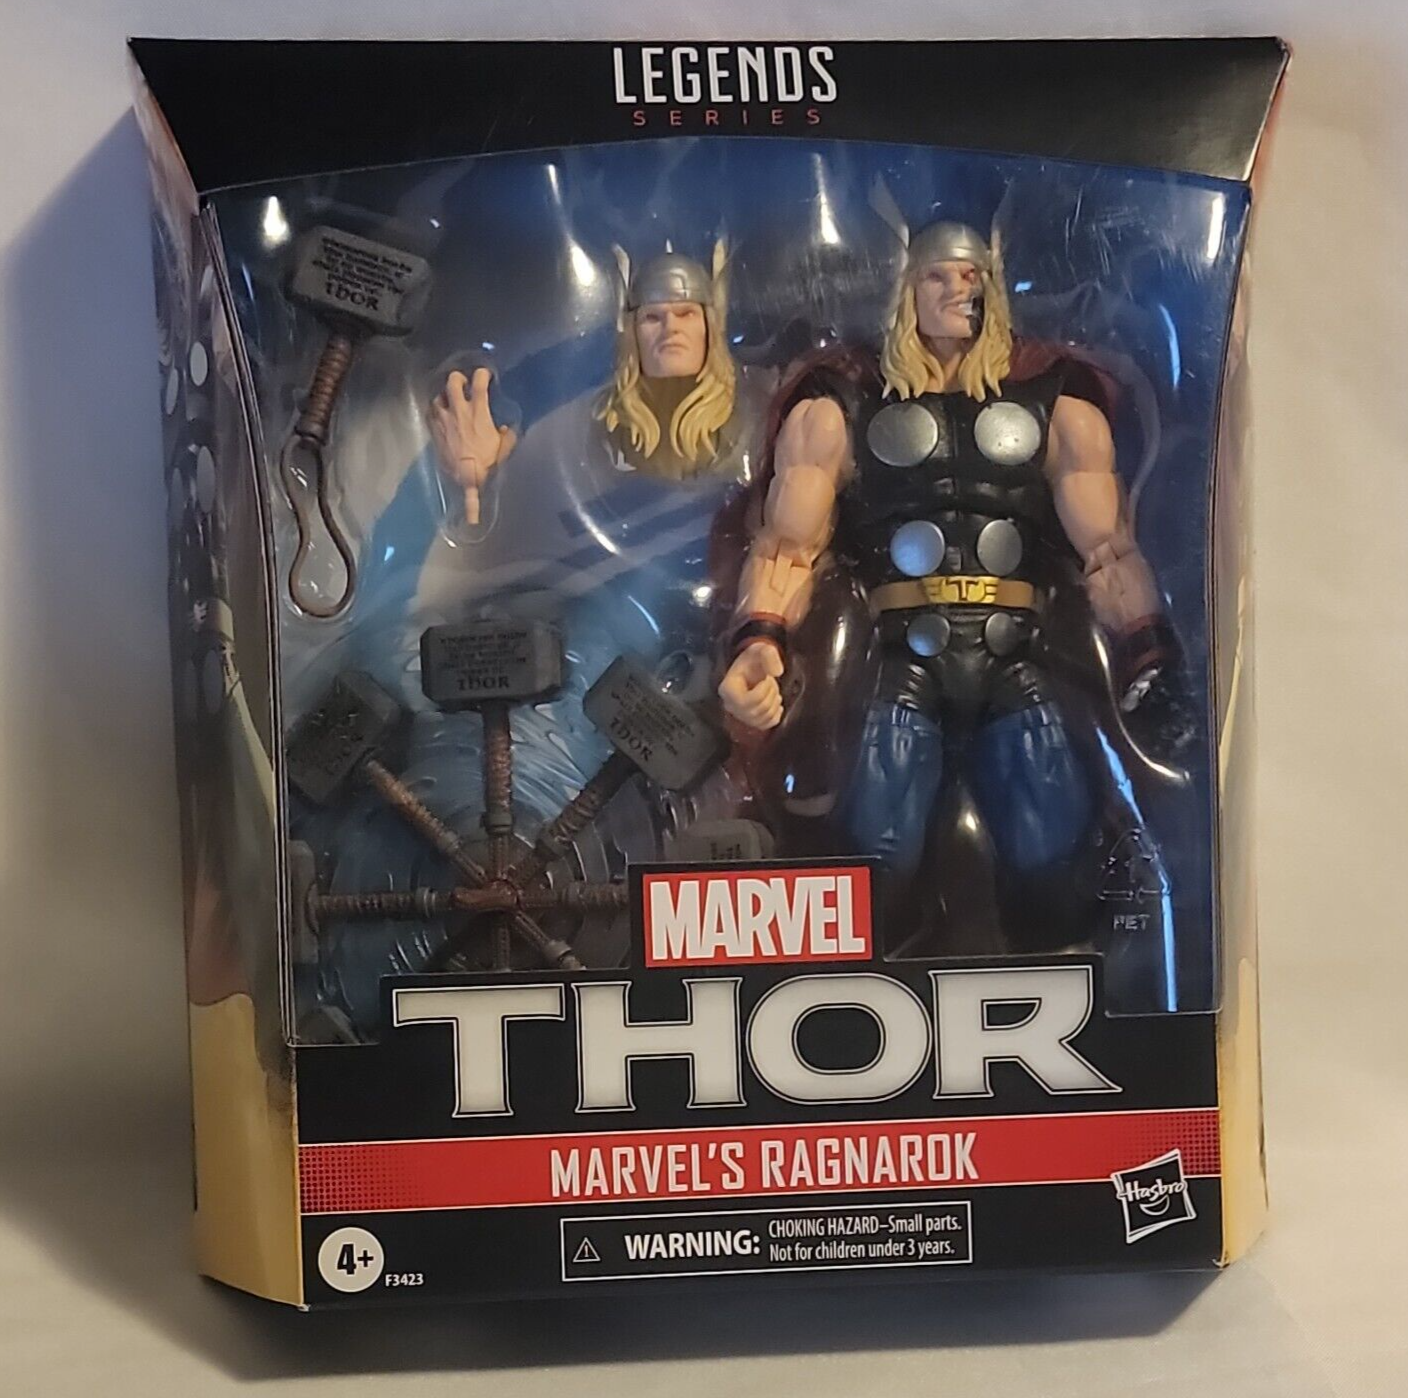 Primary image for Marvel Legends Series Thor Marvel's Ragnarok Hasbro 6" Figure Package Damage